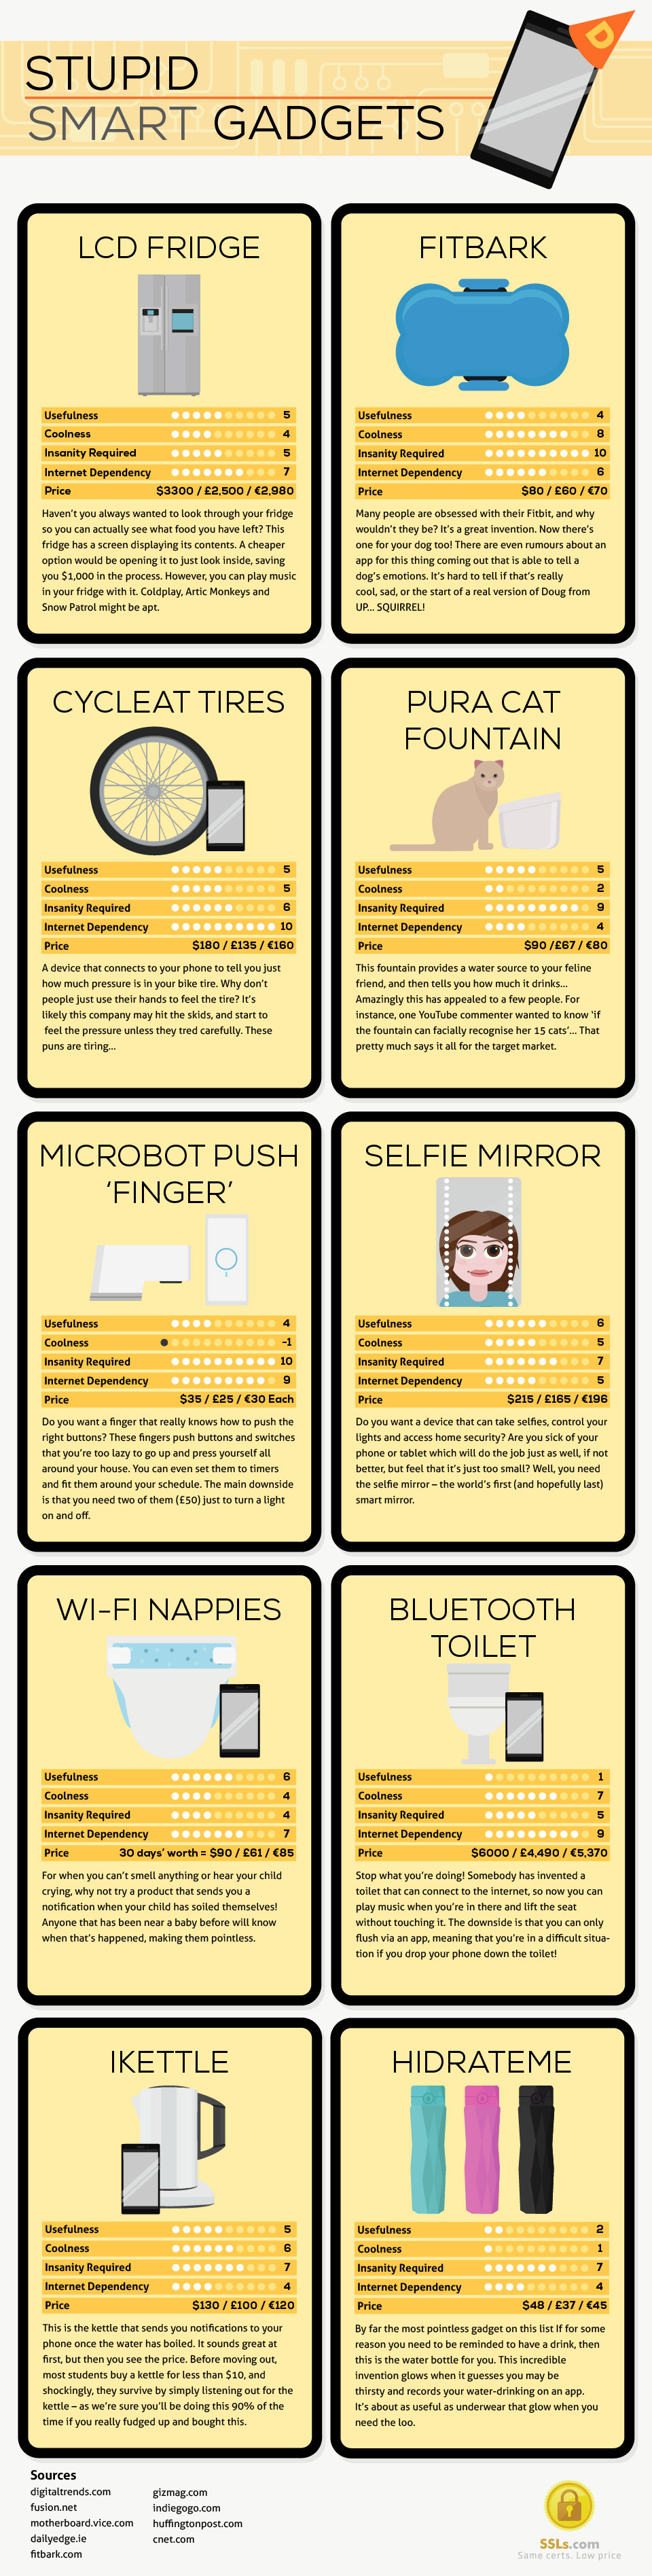 Stupid_smart_gadgets_infographic